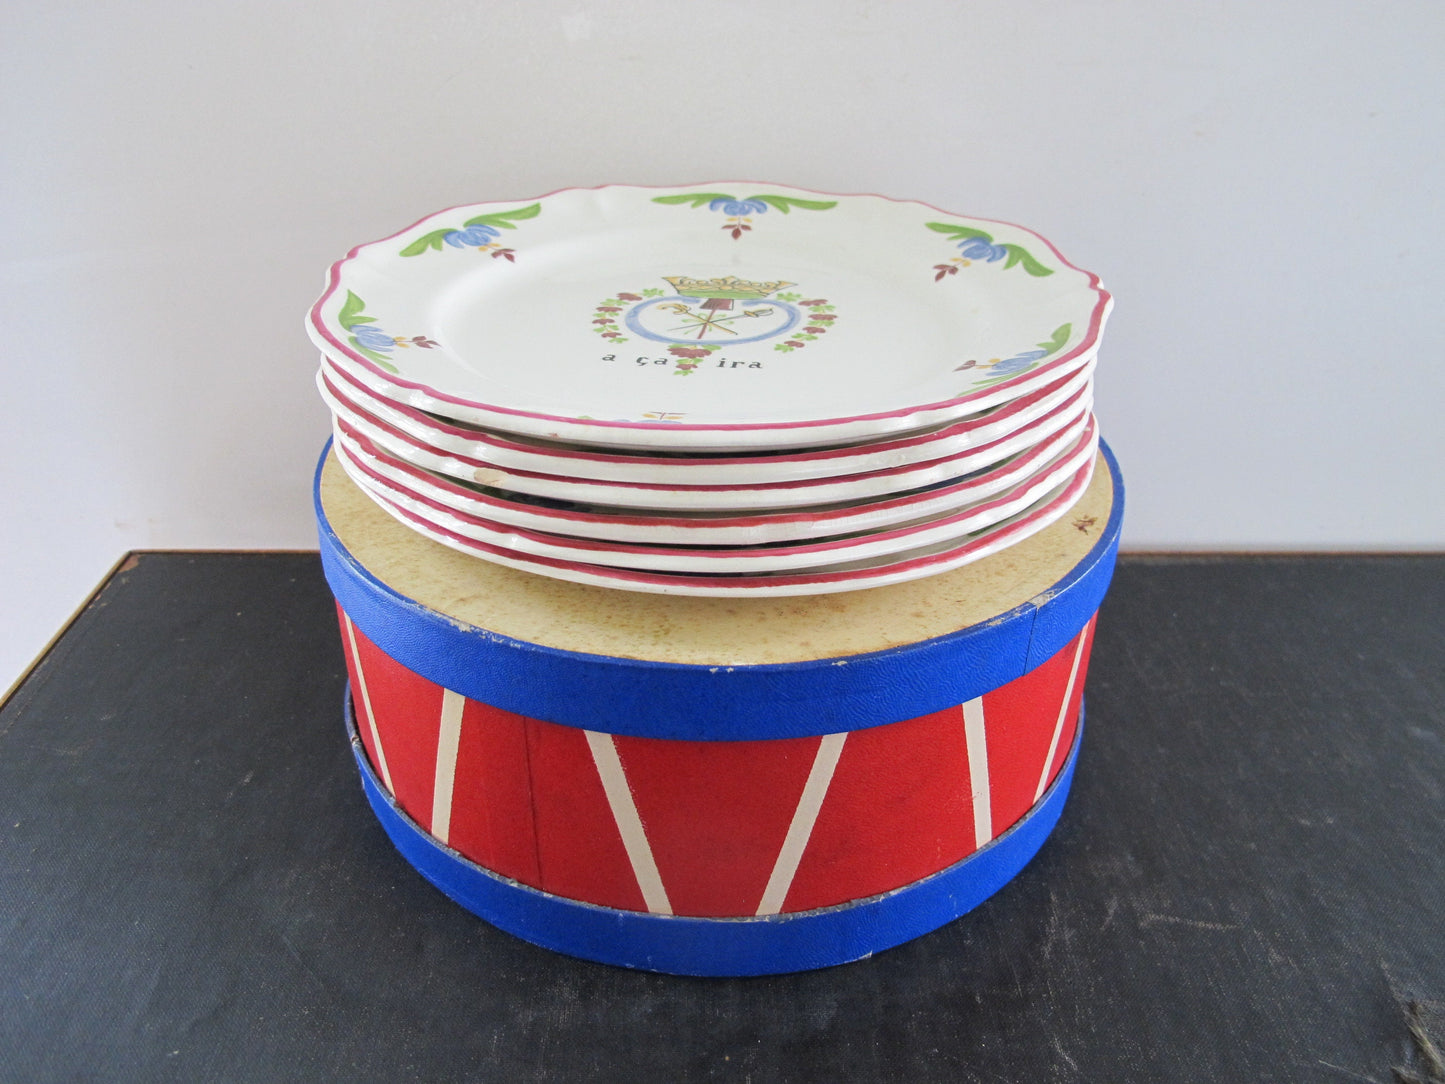 Plates Bastille Day Handpainted Saint-Amand a ca ira France Mottoes Set of 6 Six Original Drum Box